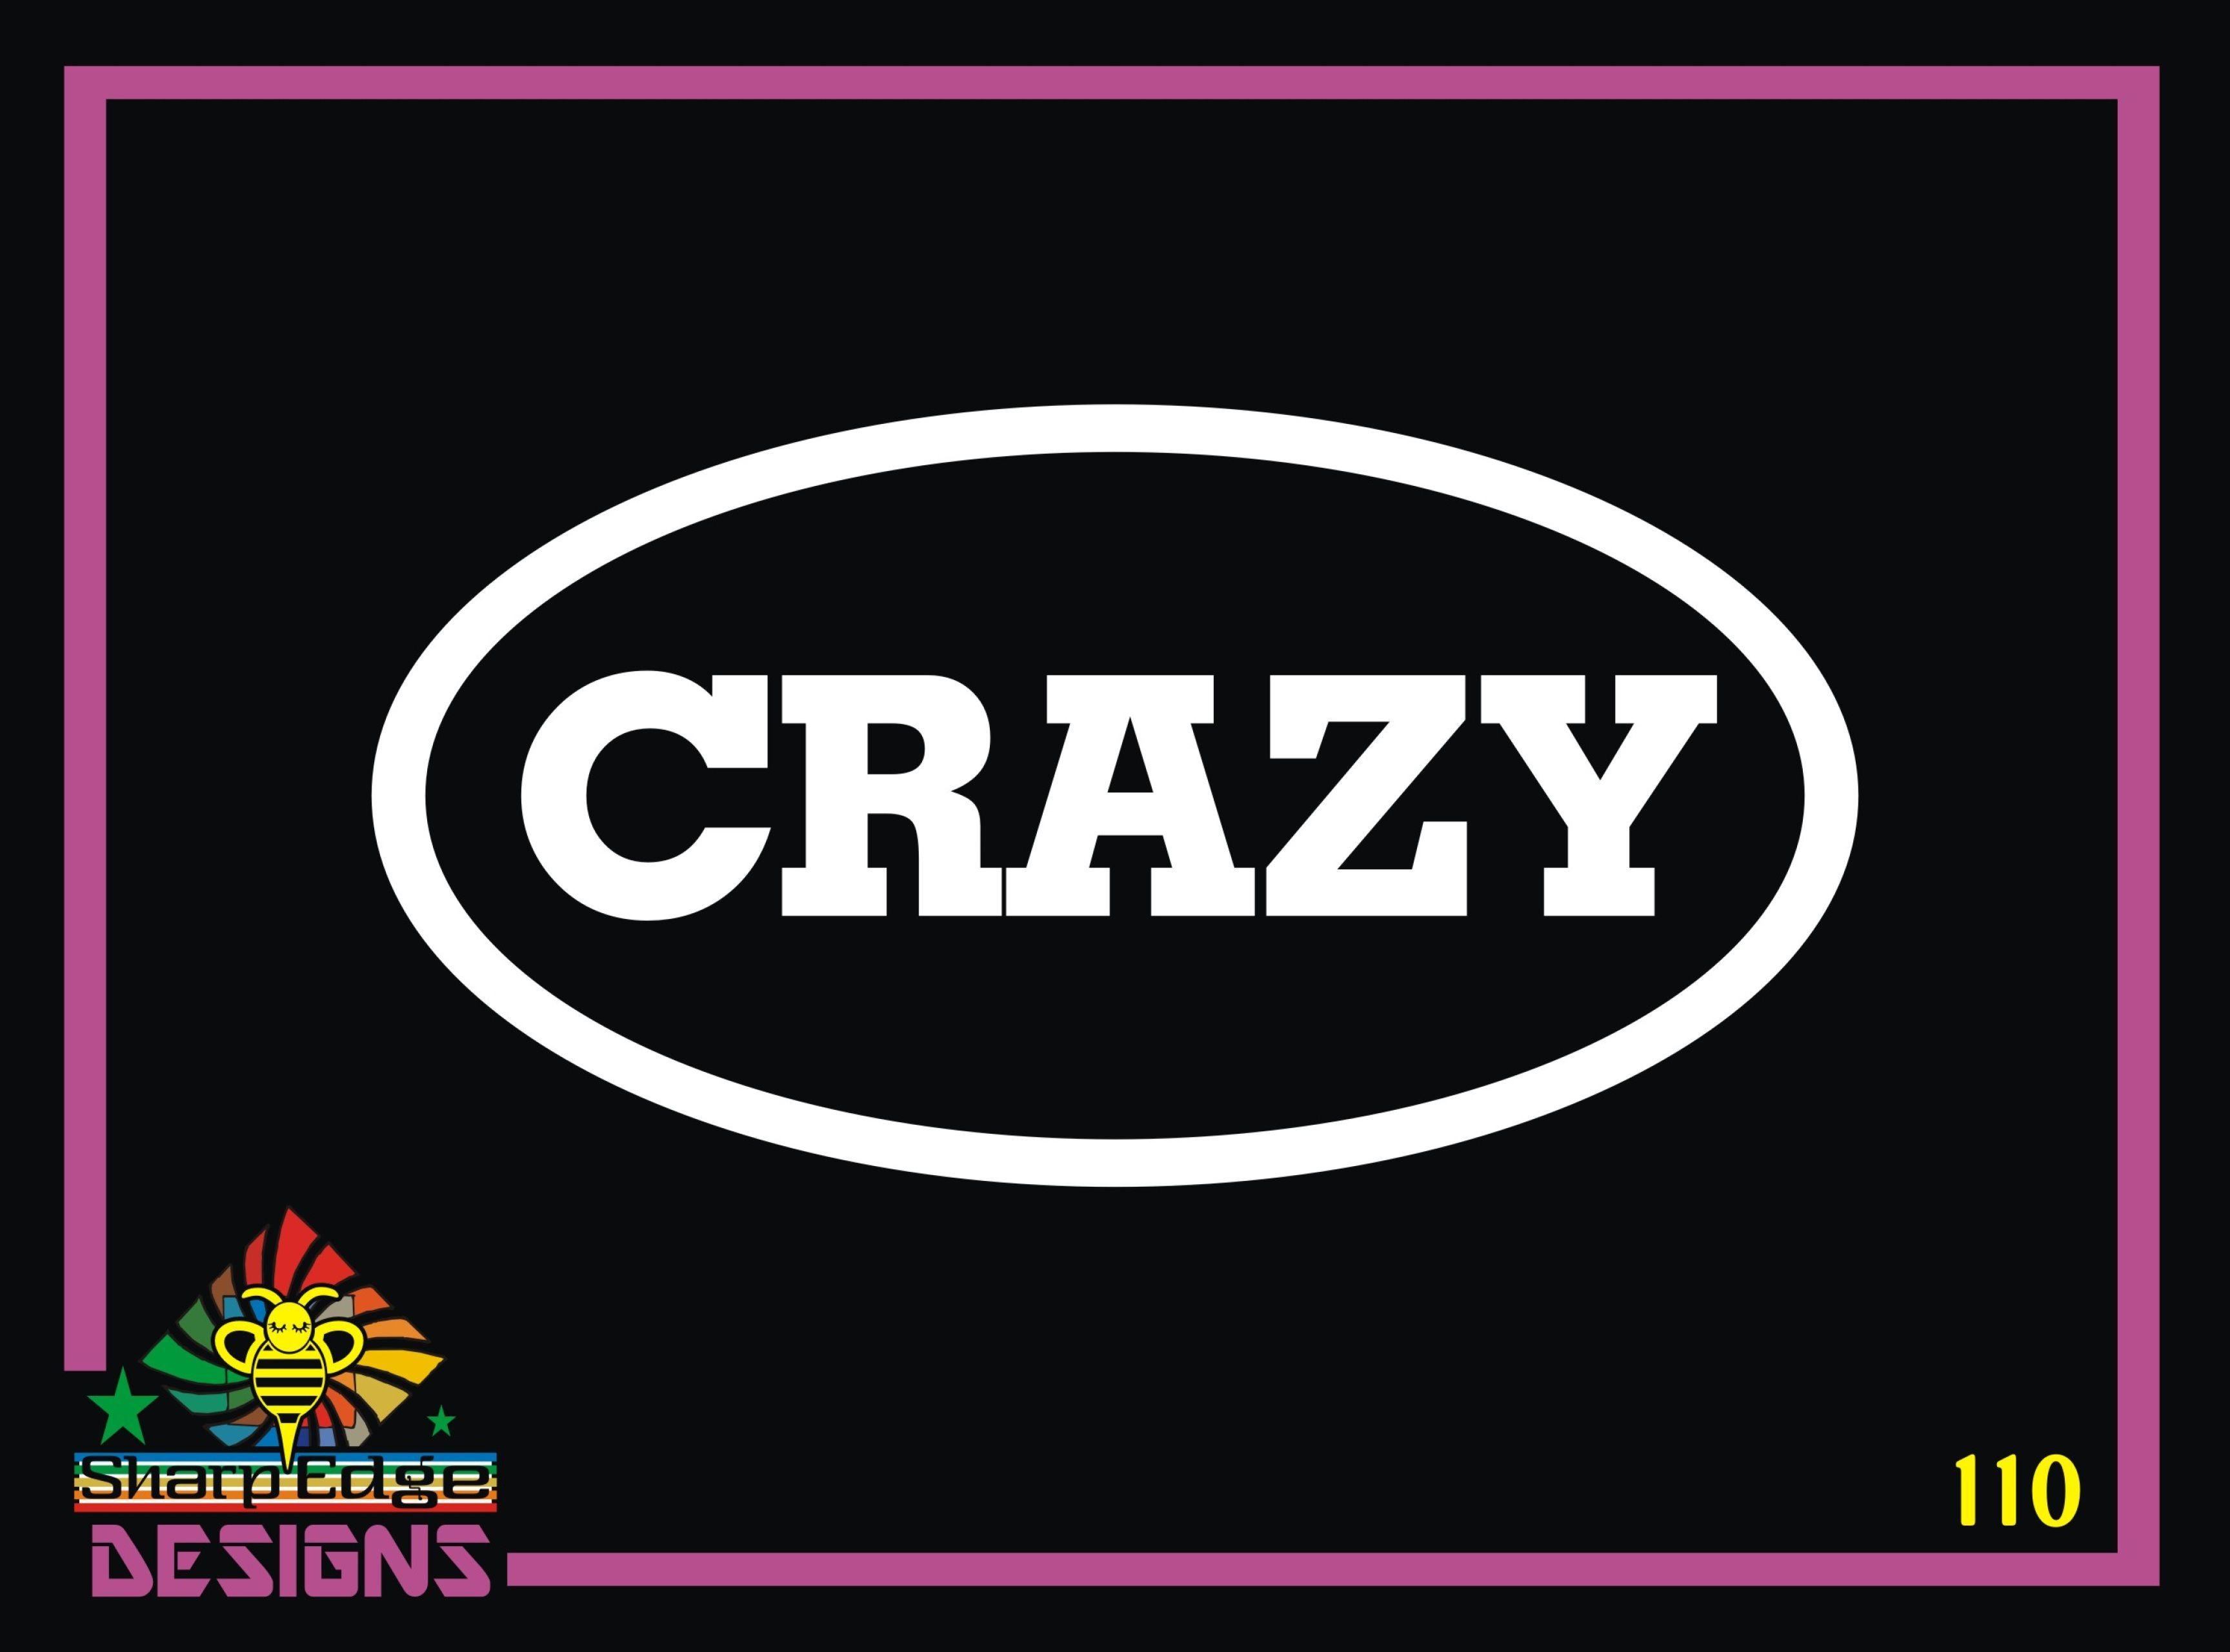 Sharp Edge Oval Logo - Crazy Oval Vinyl Decal